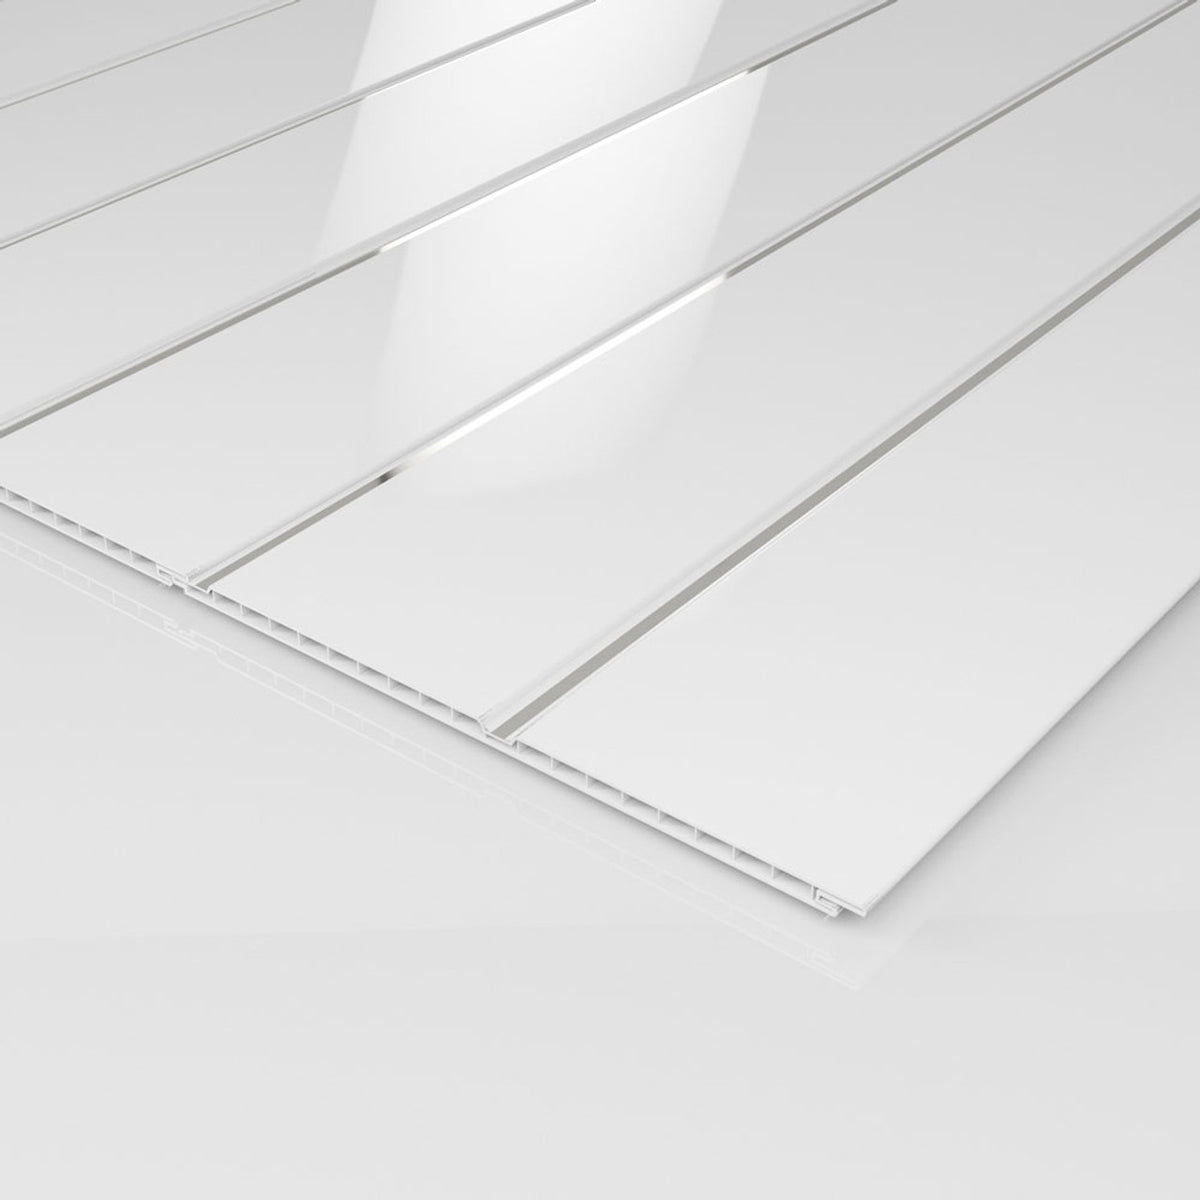 PVC Ceiling Panels - Double Chrome Gloss - 2.7m